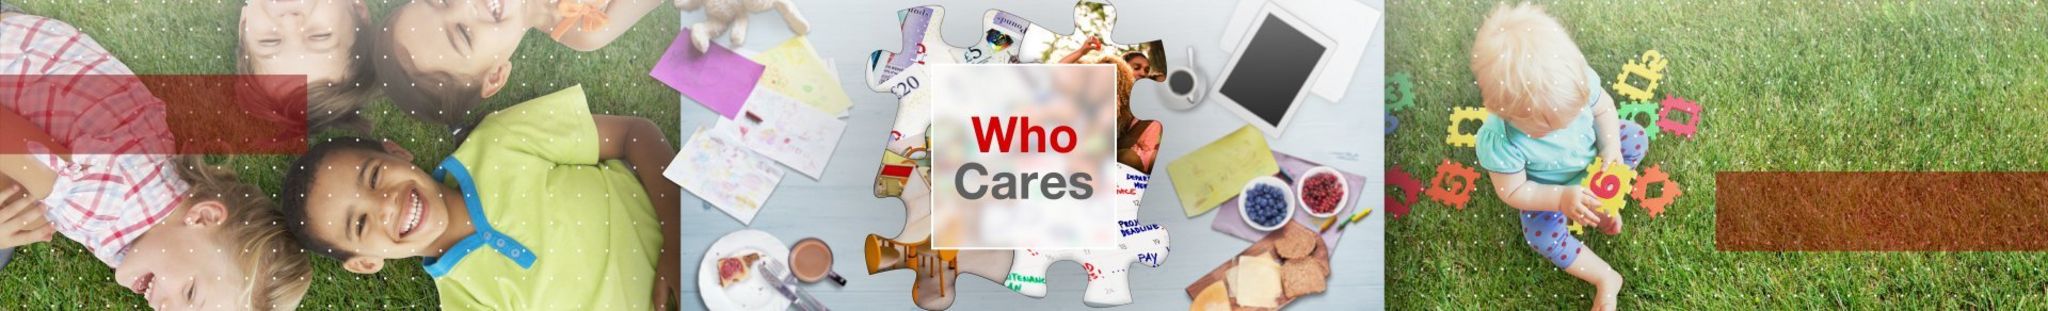 Who Cares branding